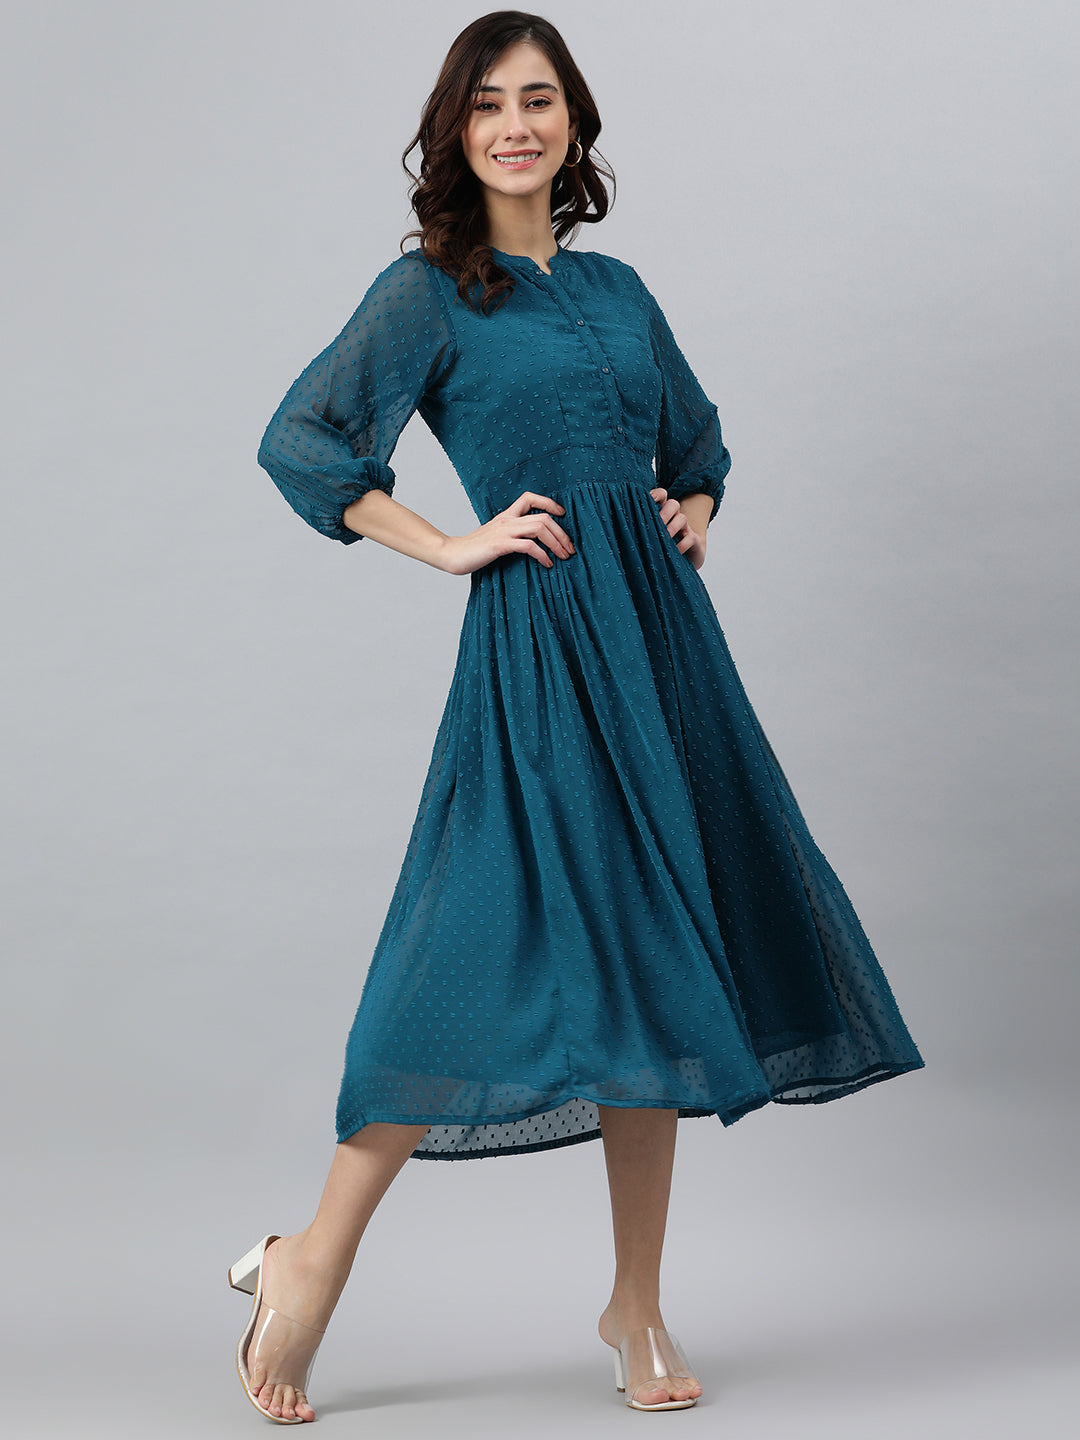 Women's Self Design Teal Poly Chiffon Dress - Janasya